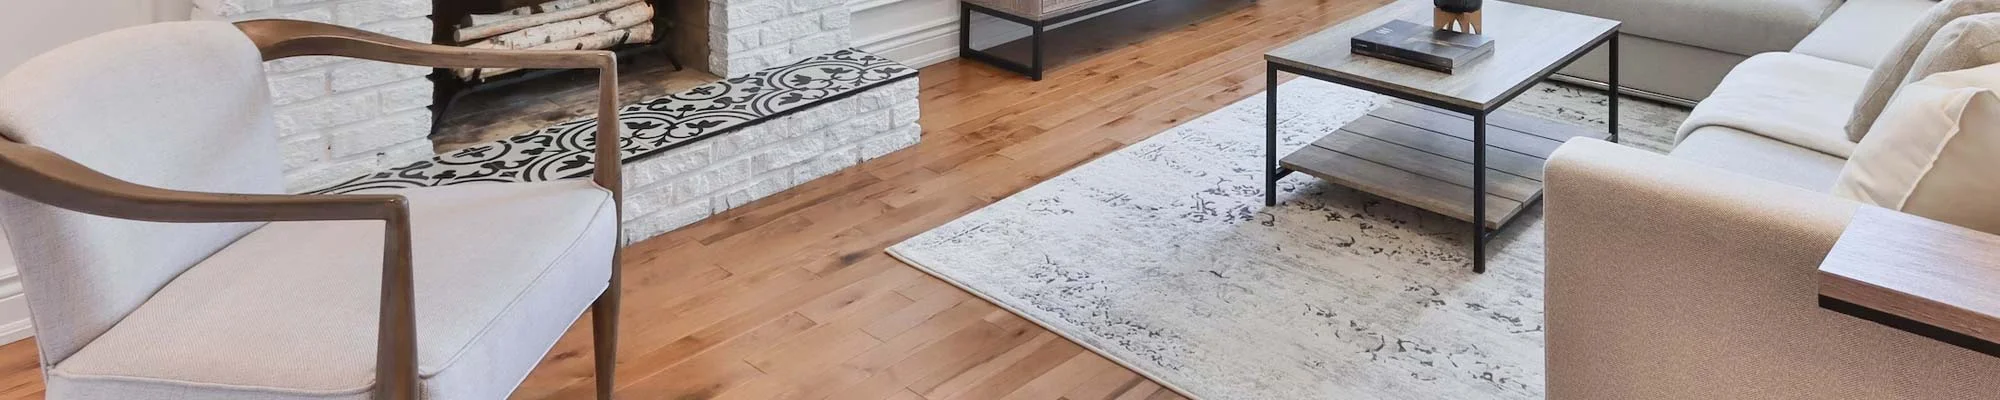 View Carpet Warehouse’s Flooring Product Catalog